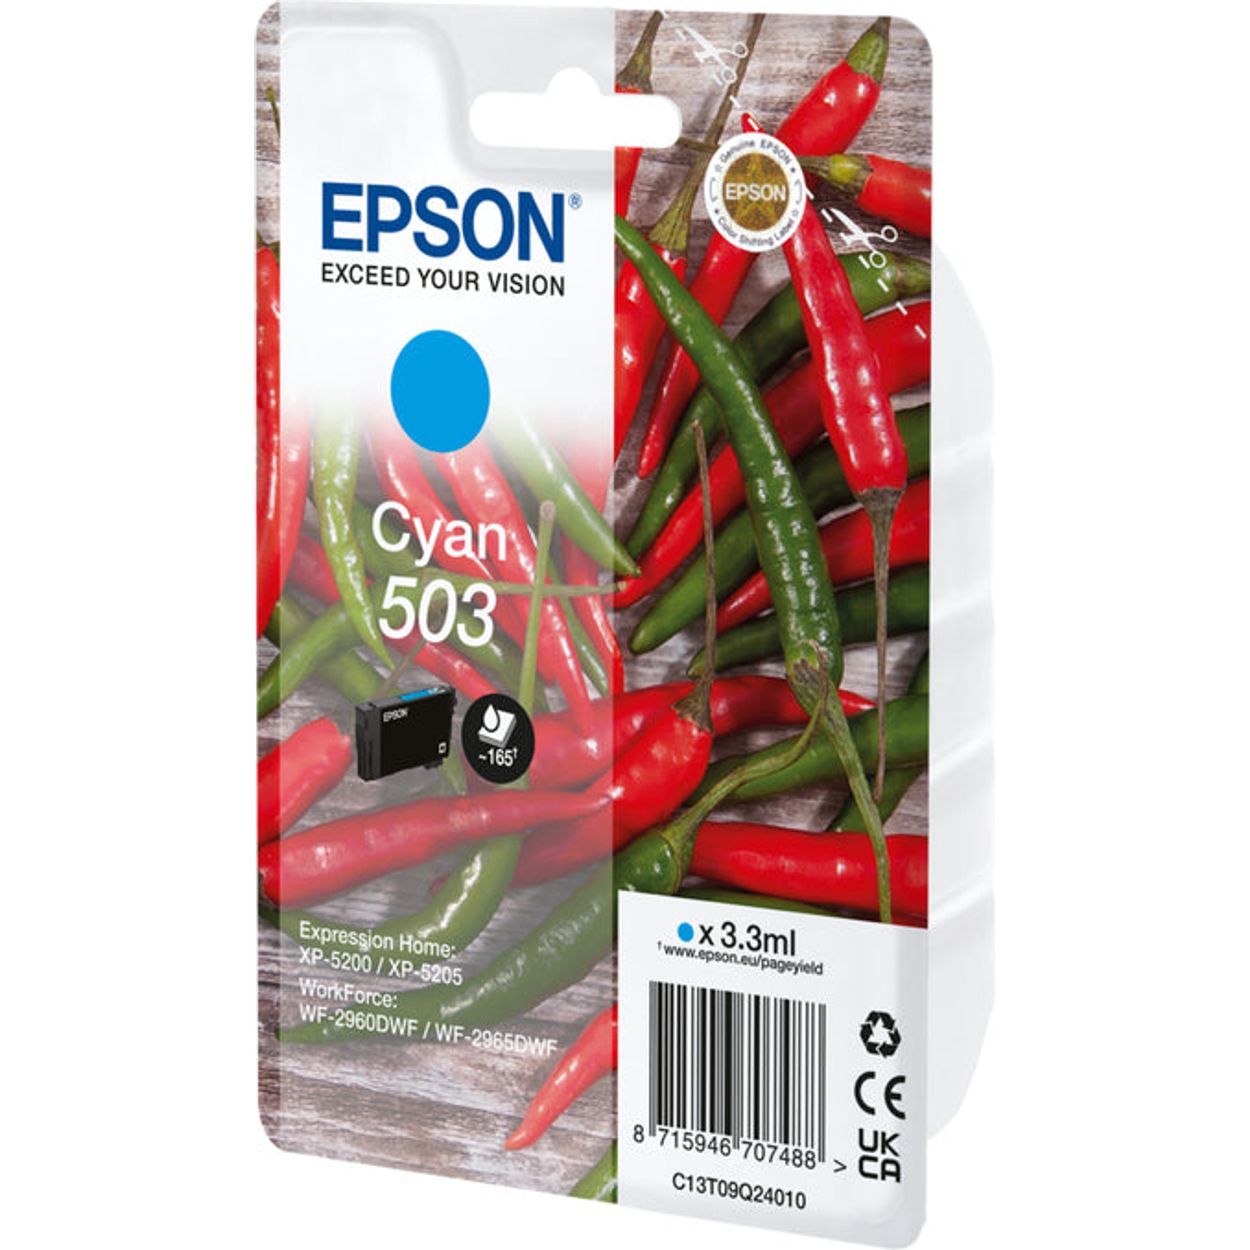 EPSON 503 blekhylki blátt C13T09Q24010 Epson XP-5200